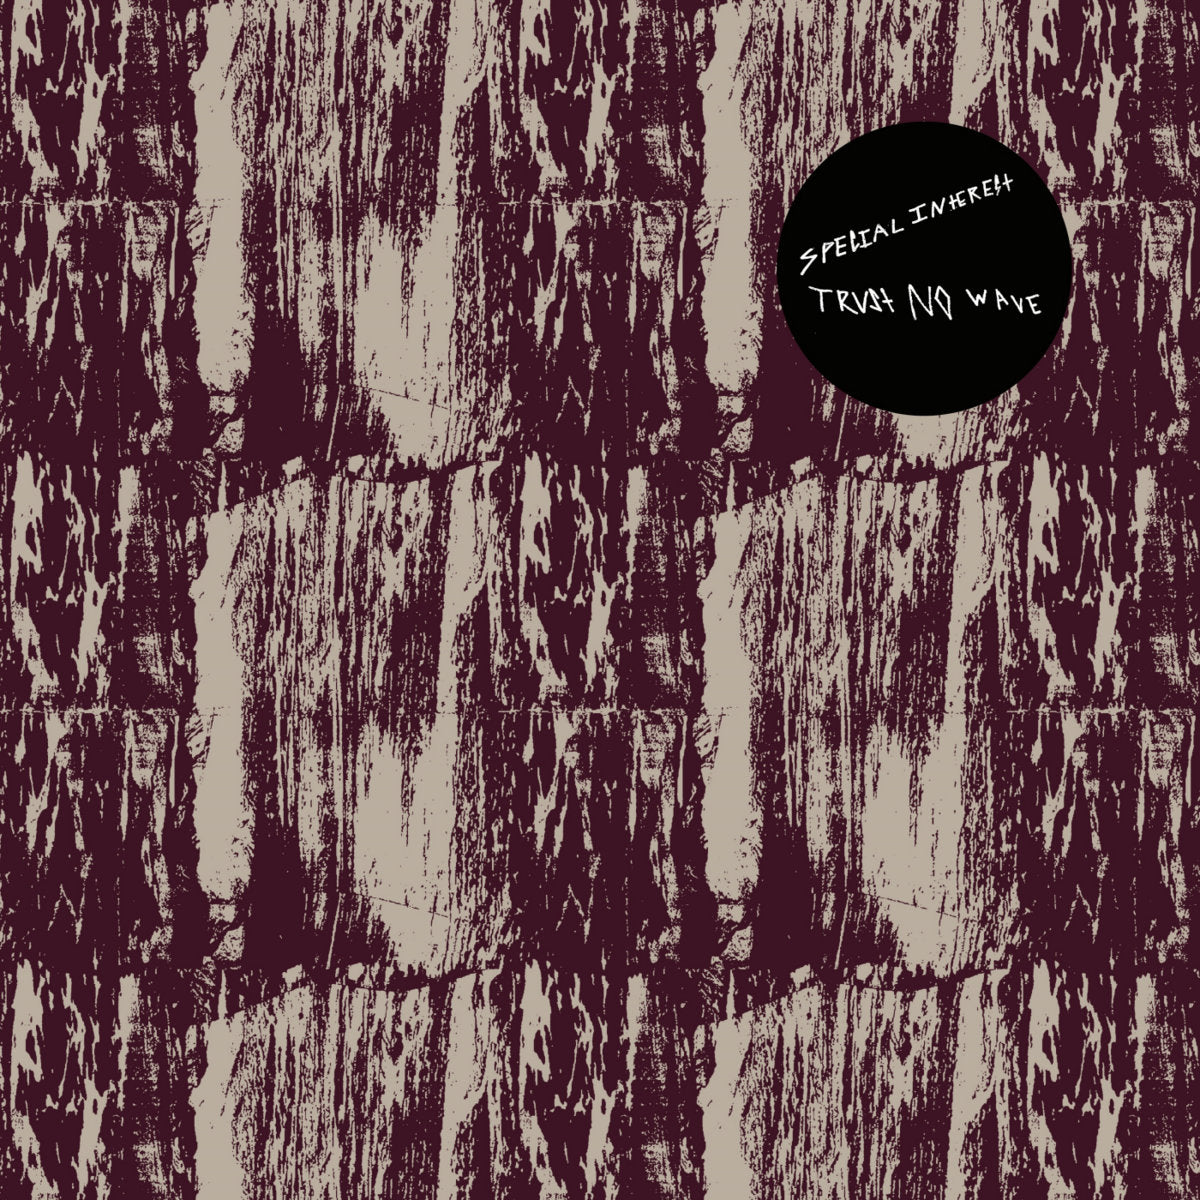 Special Interest: Trust No Wave - The 2016 Demos (Vinyl LP)